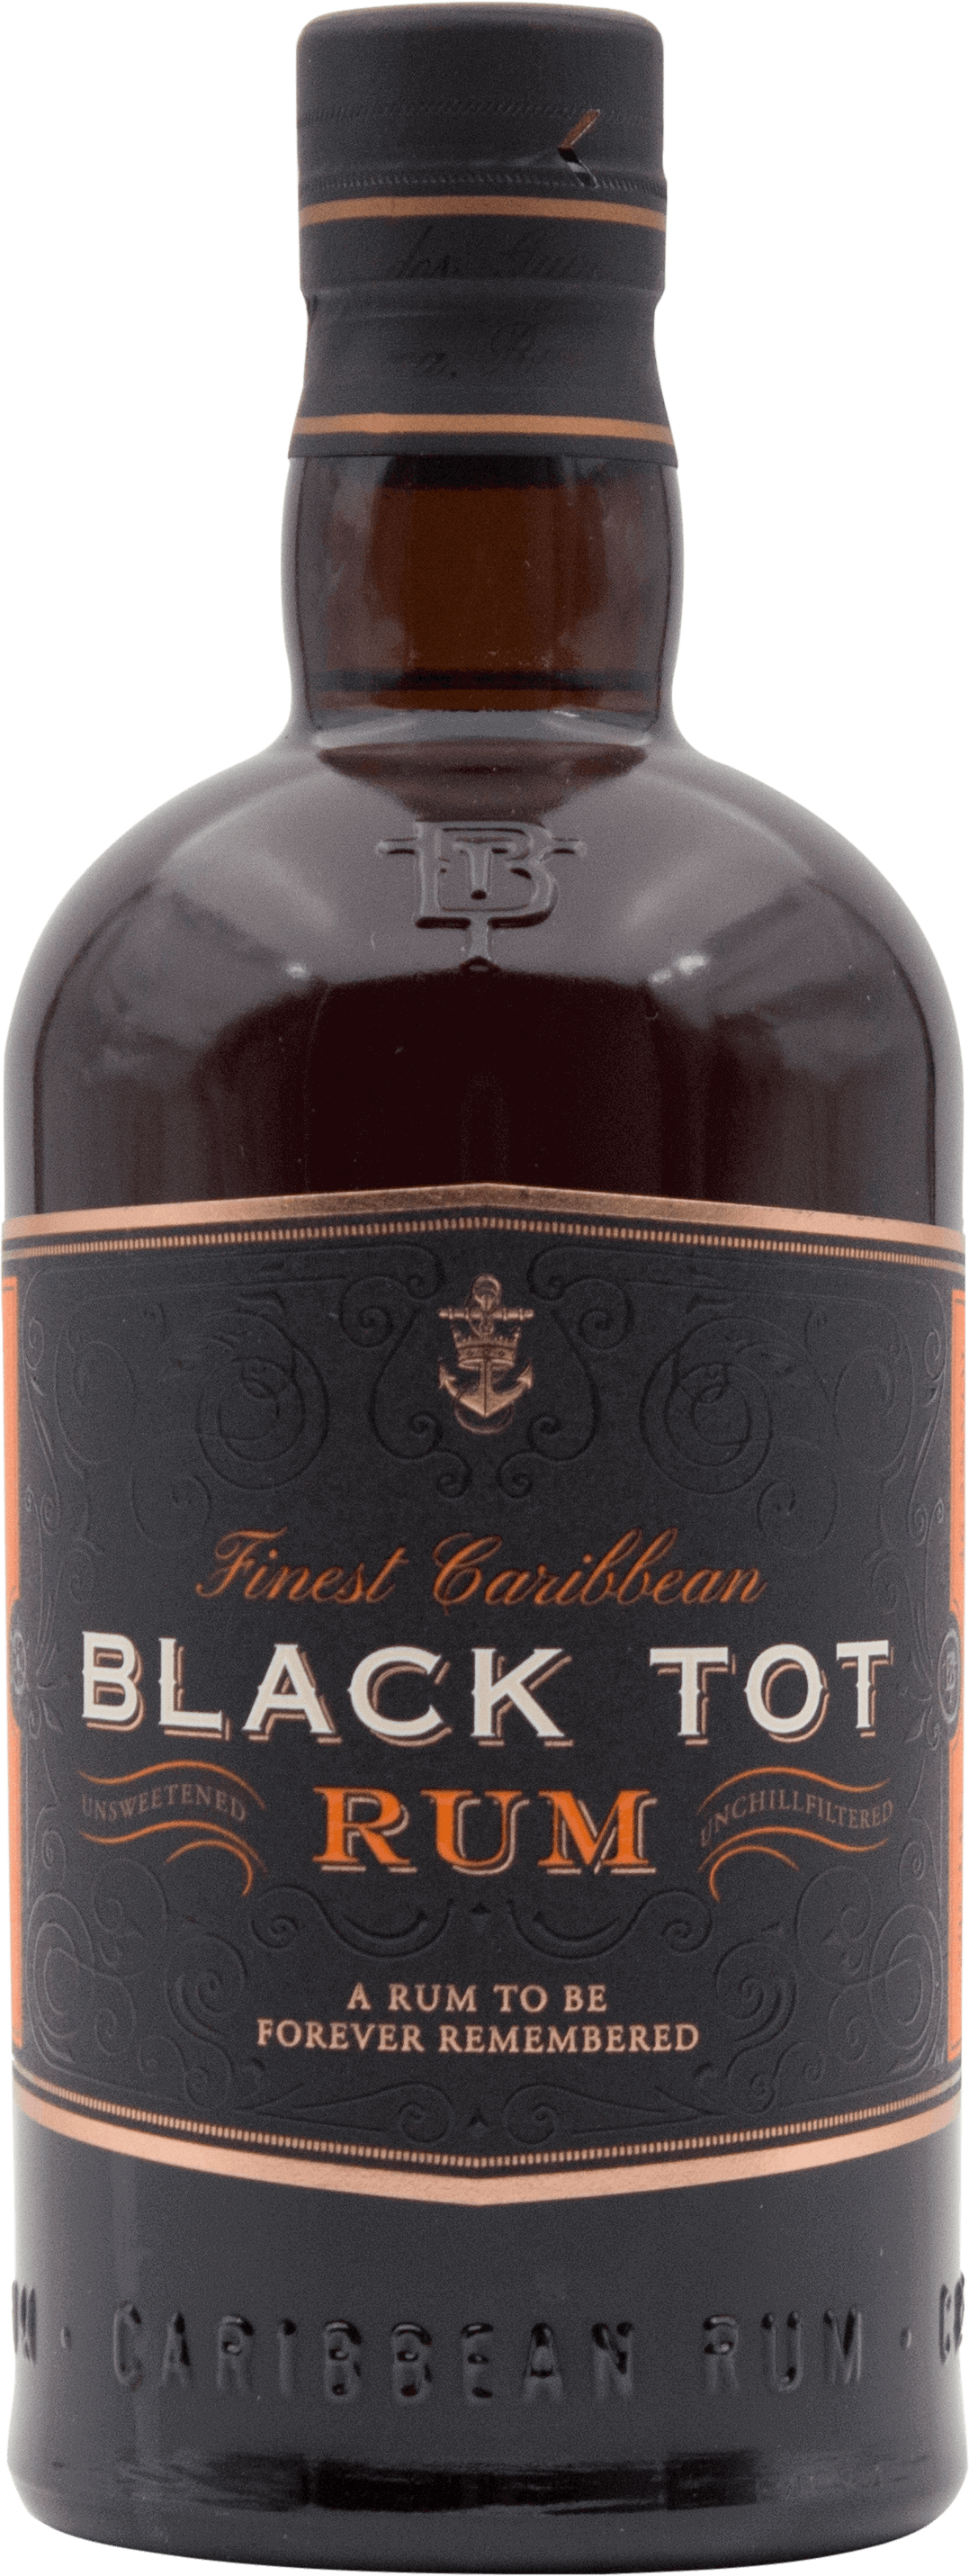 An image of a bottle of Black Tot Caribbean Navy Rum 700ml